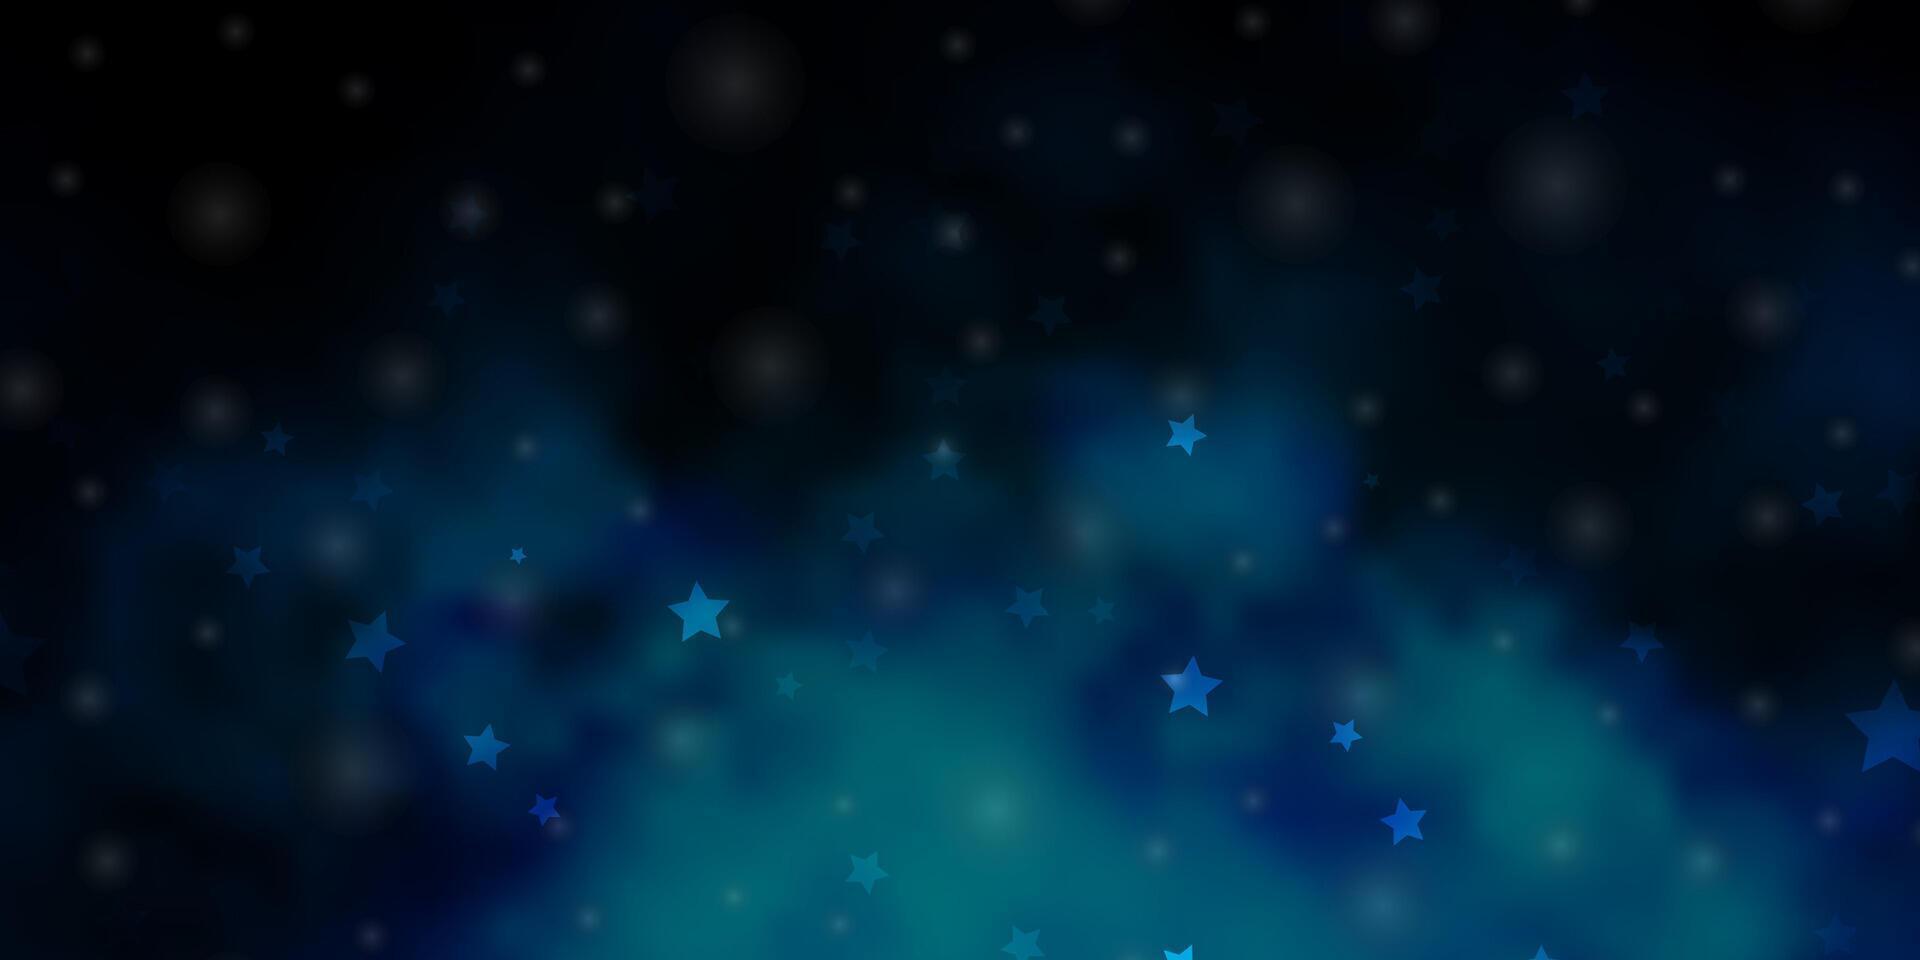 diseño de vector azul oscuro con estrellas brillantes.